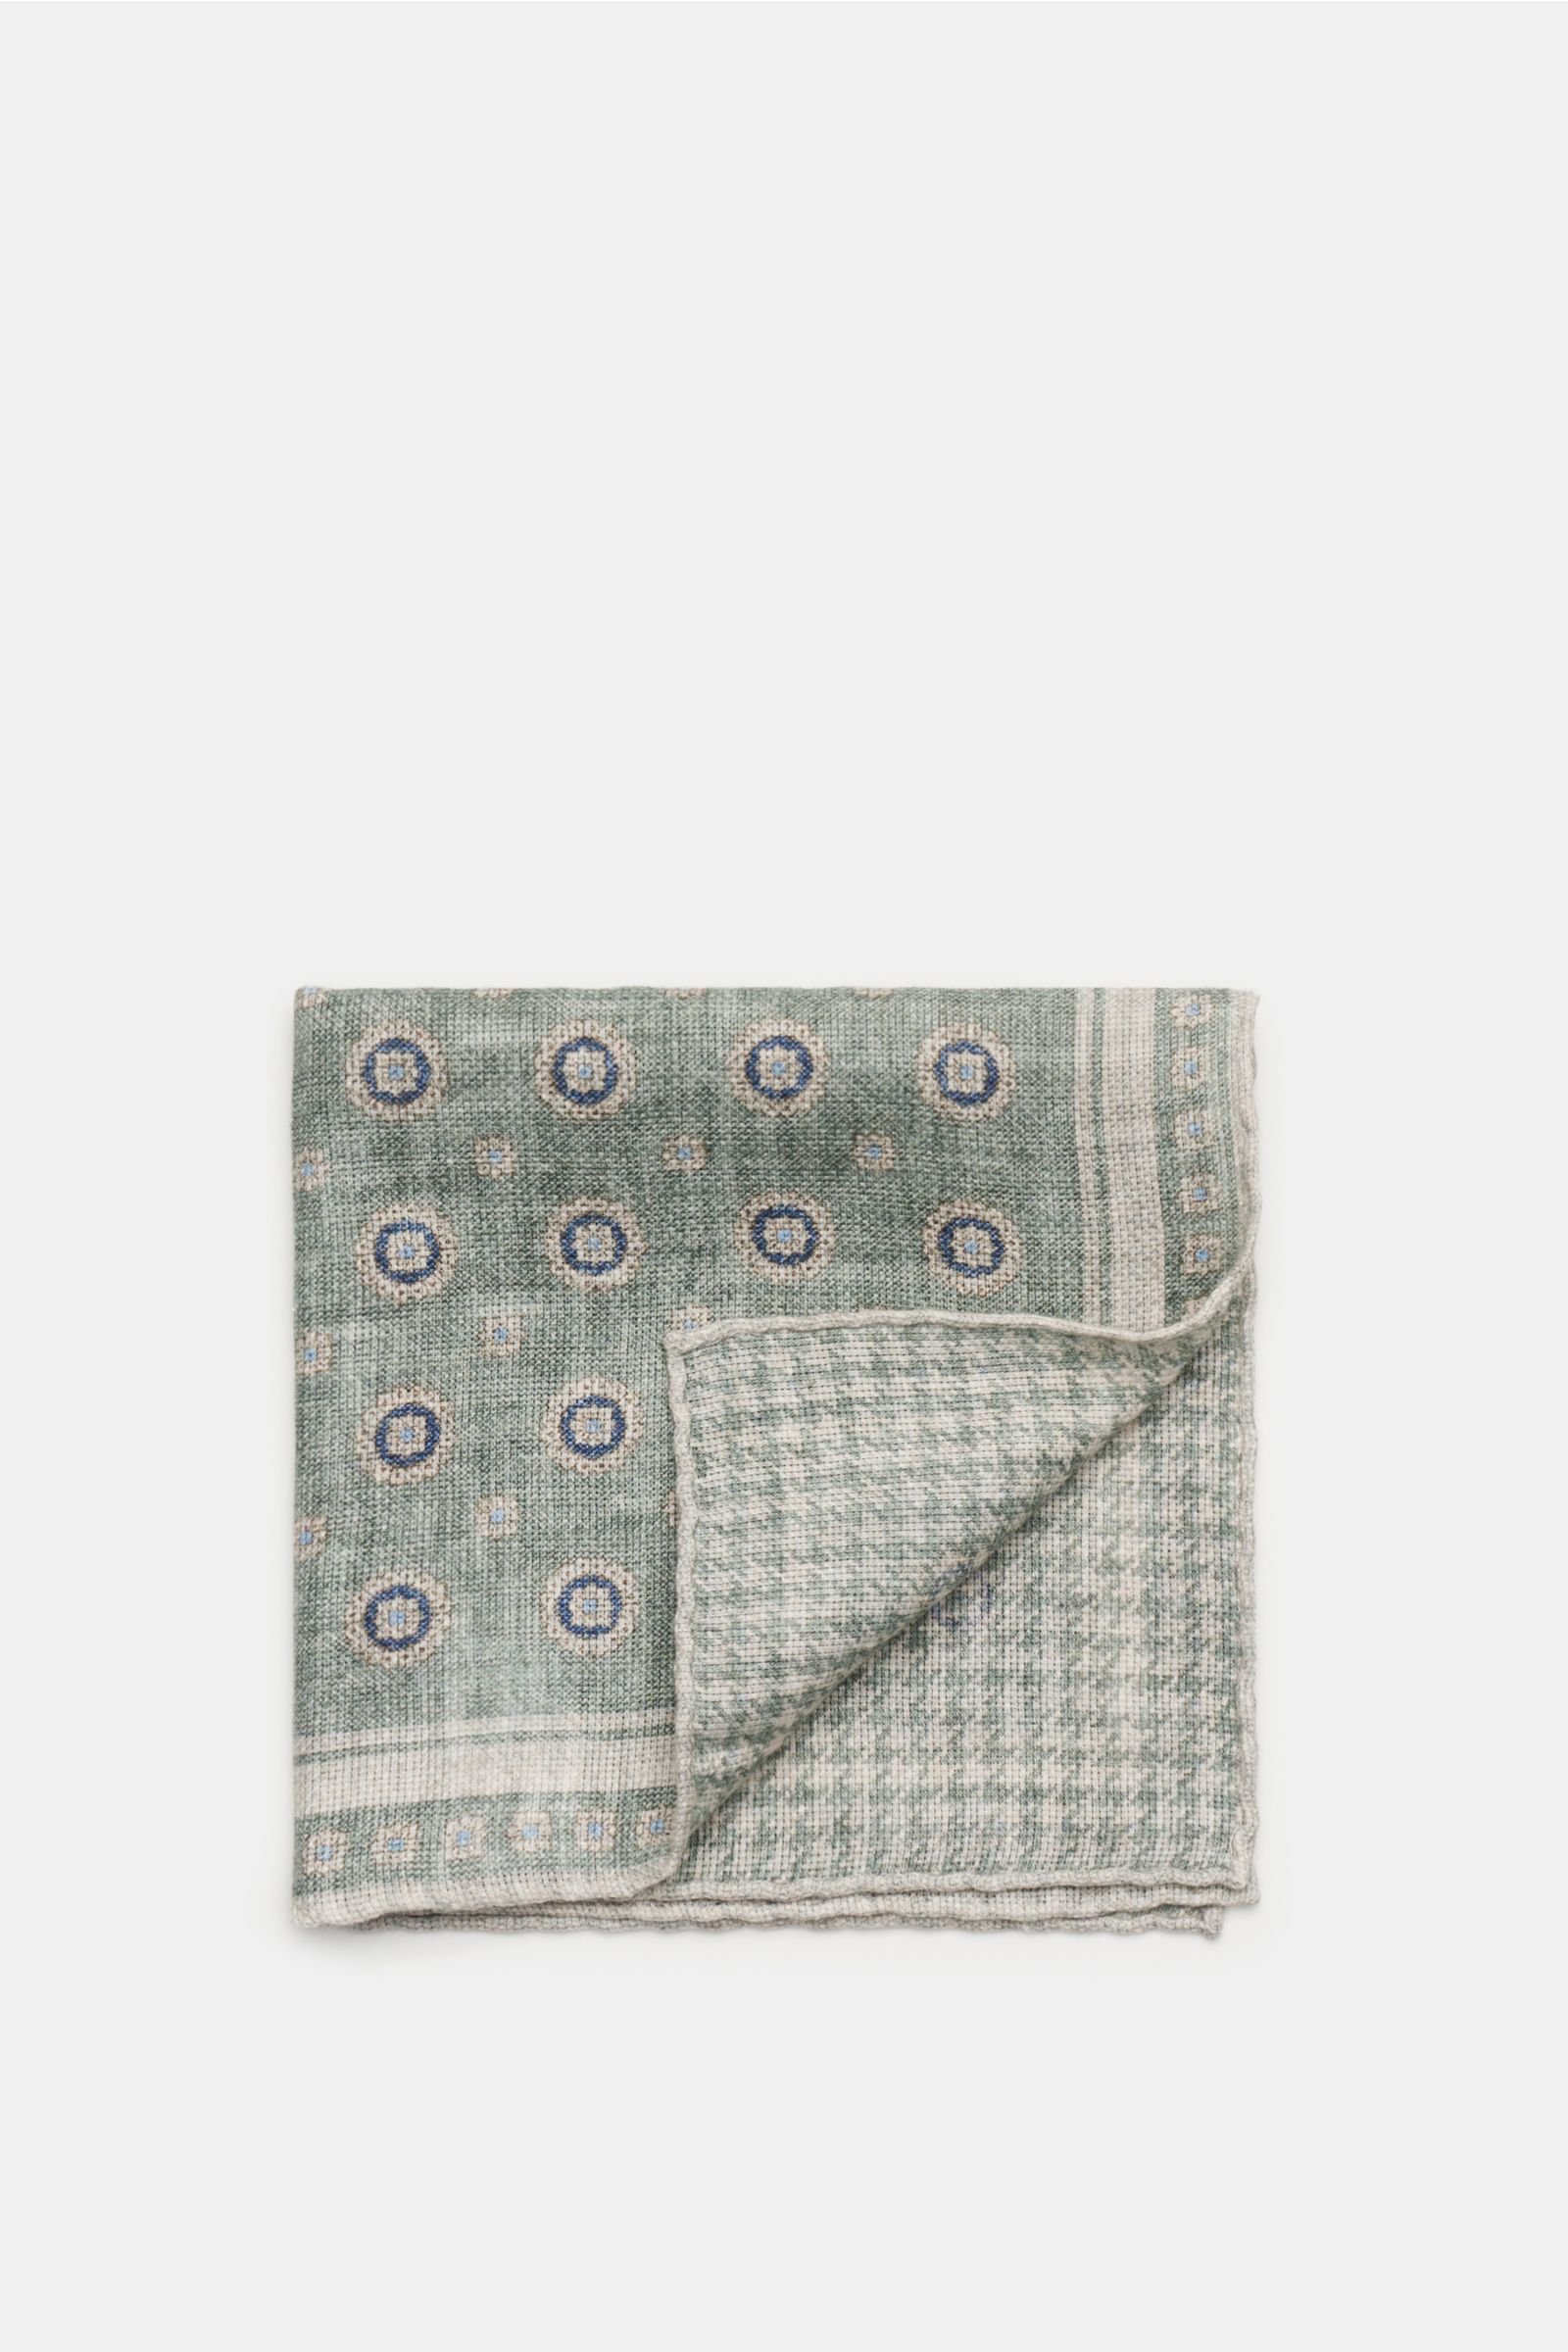 Pocket square grey-green/cream patterned